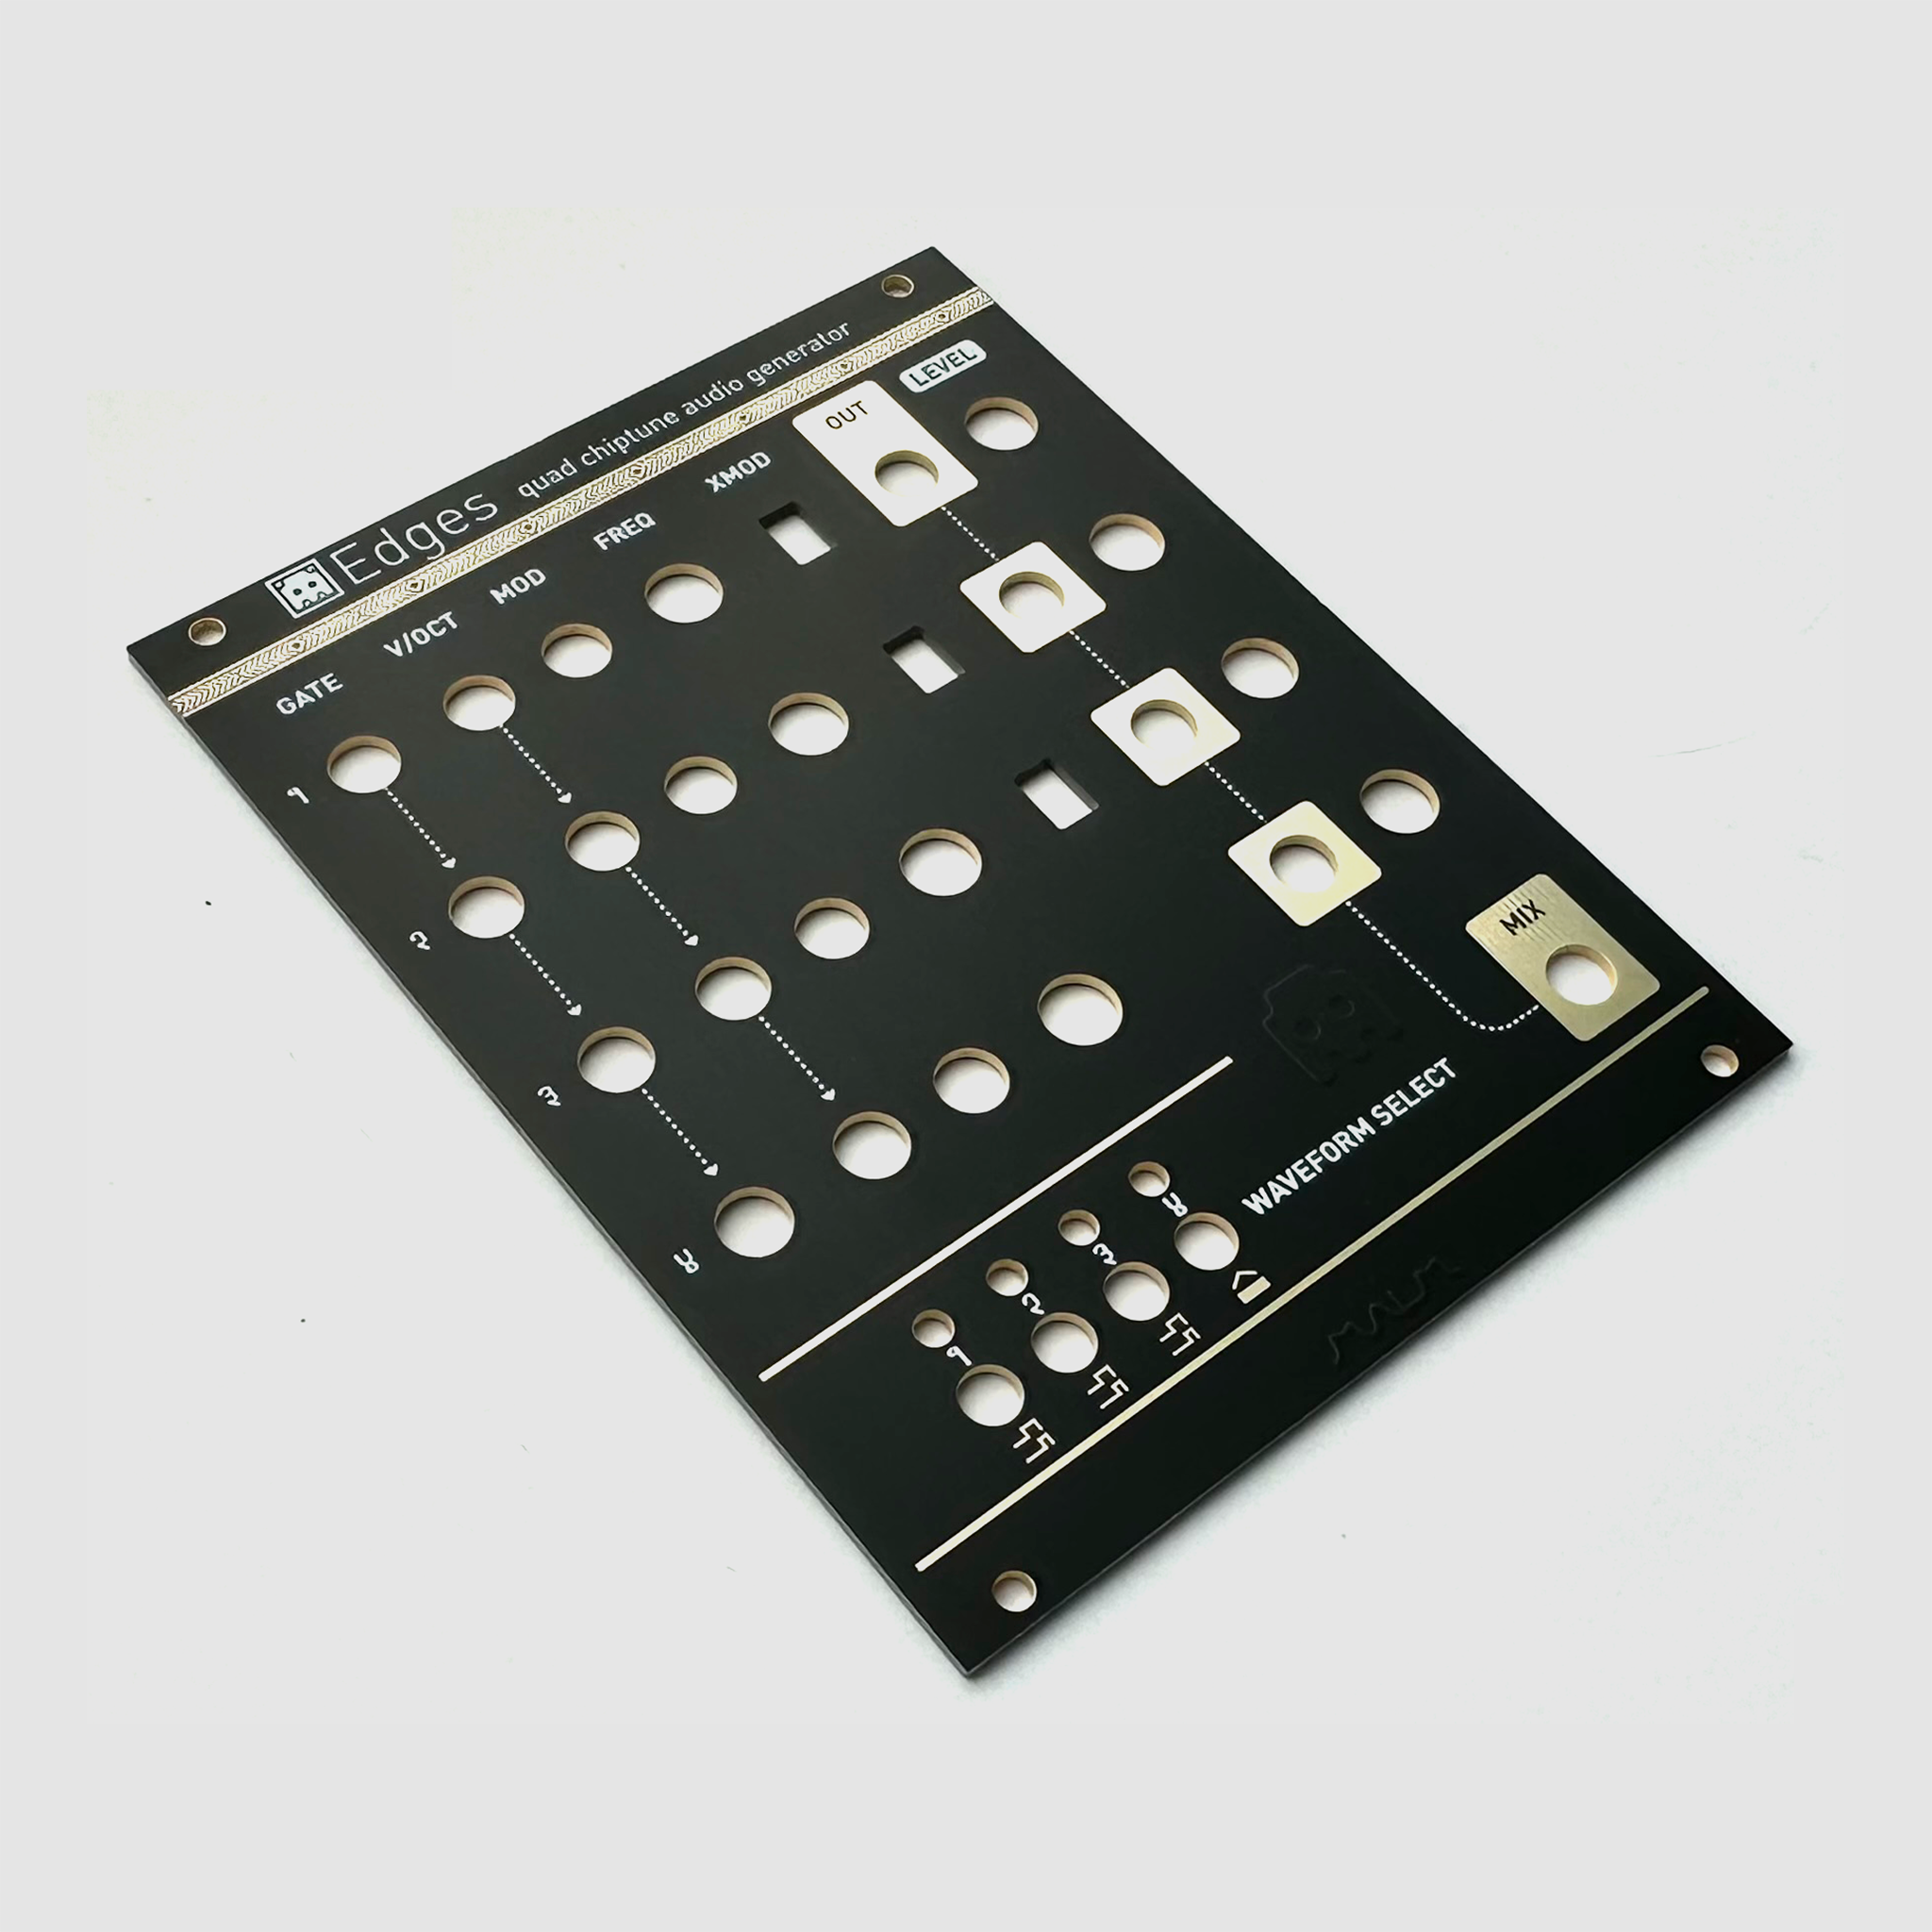 Black panel for Mutable Instruments Edges